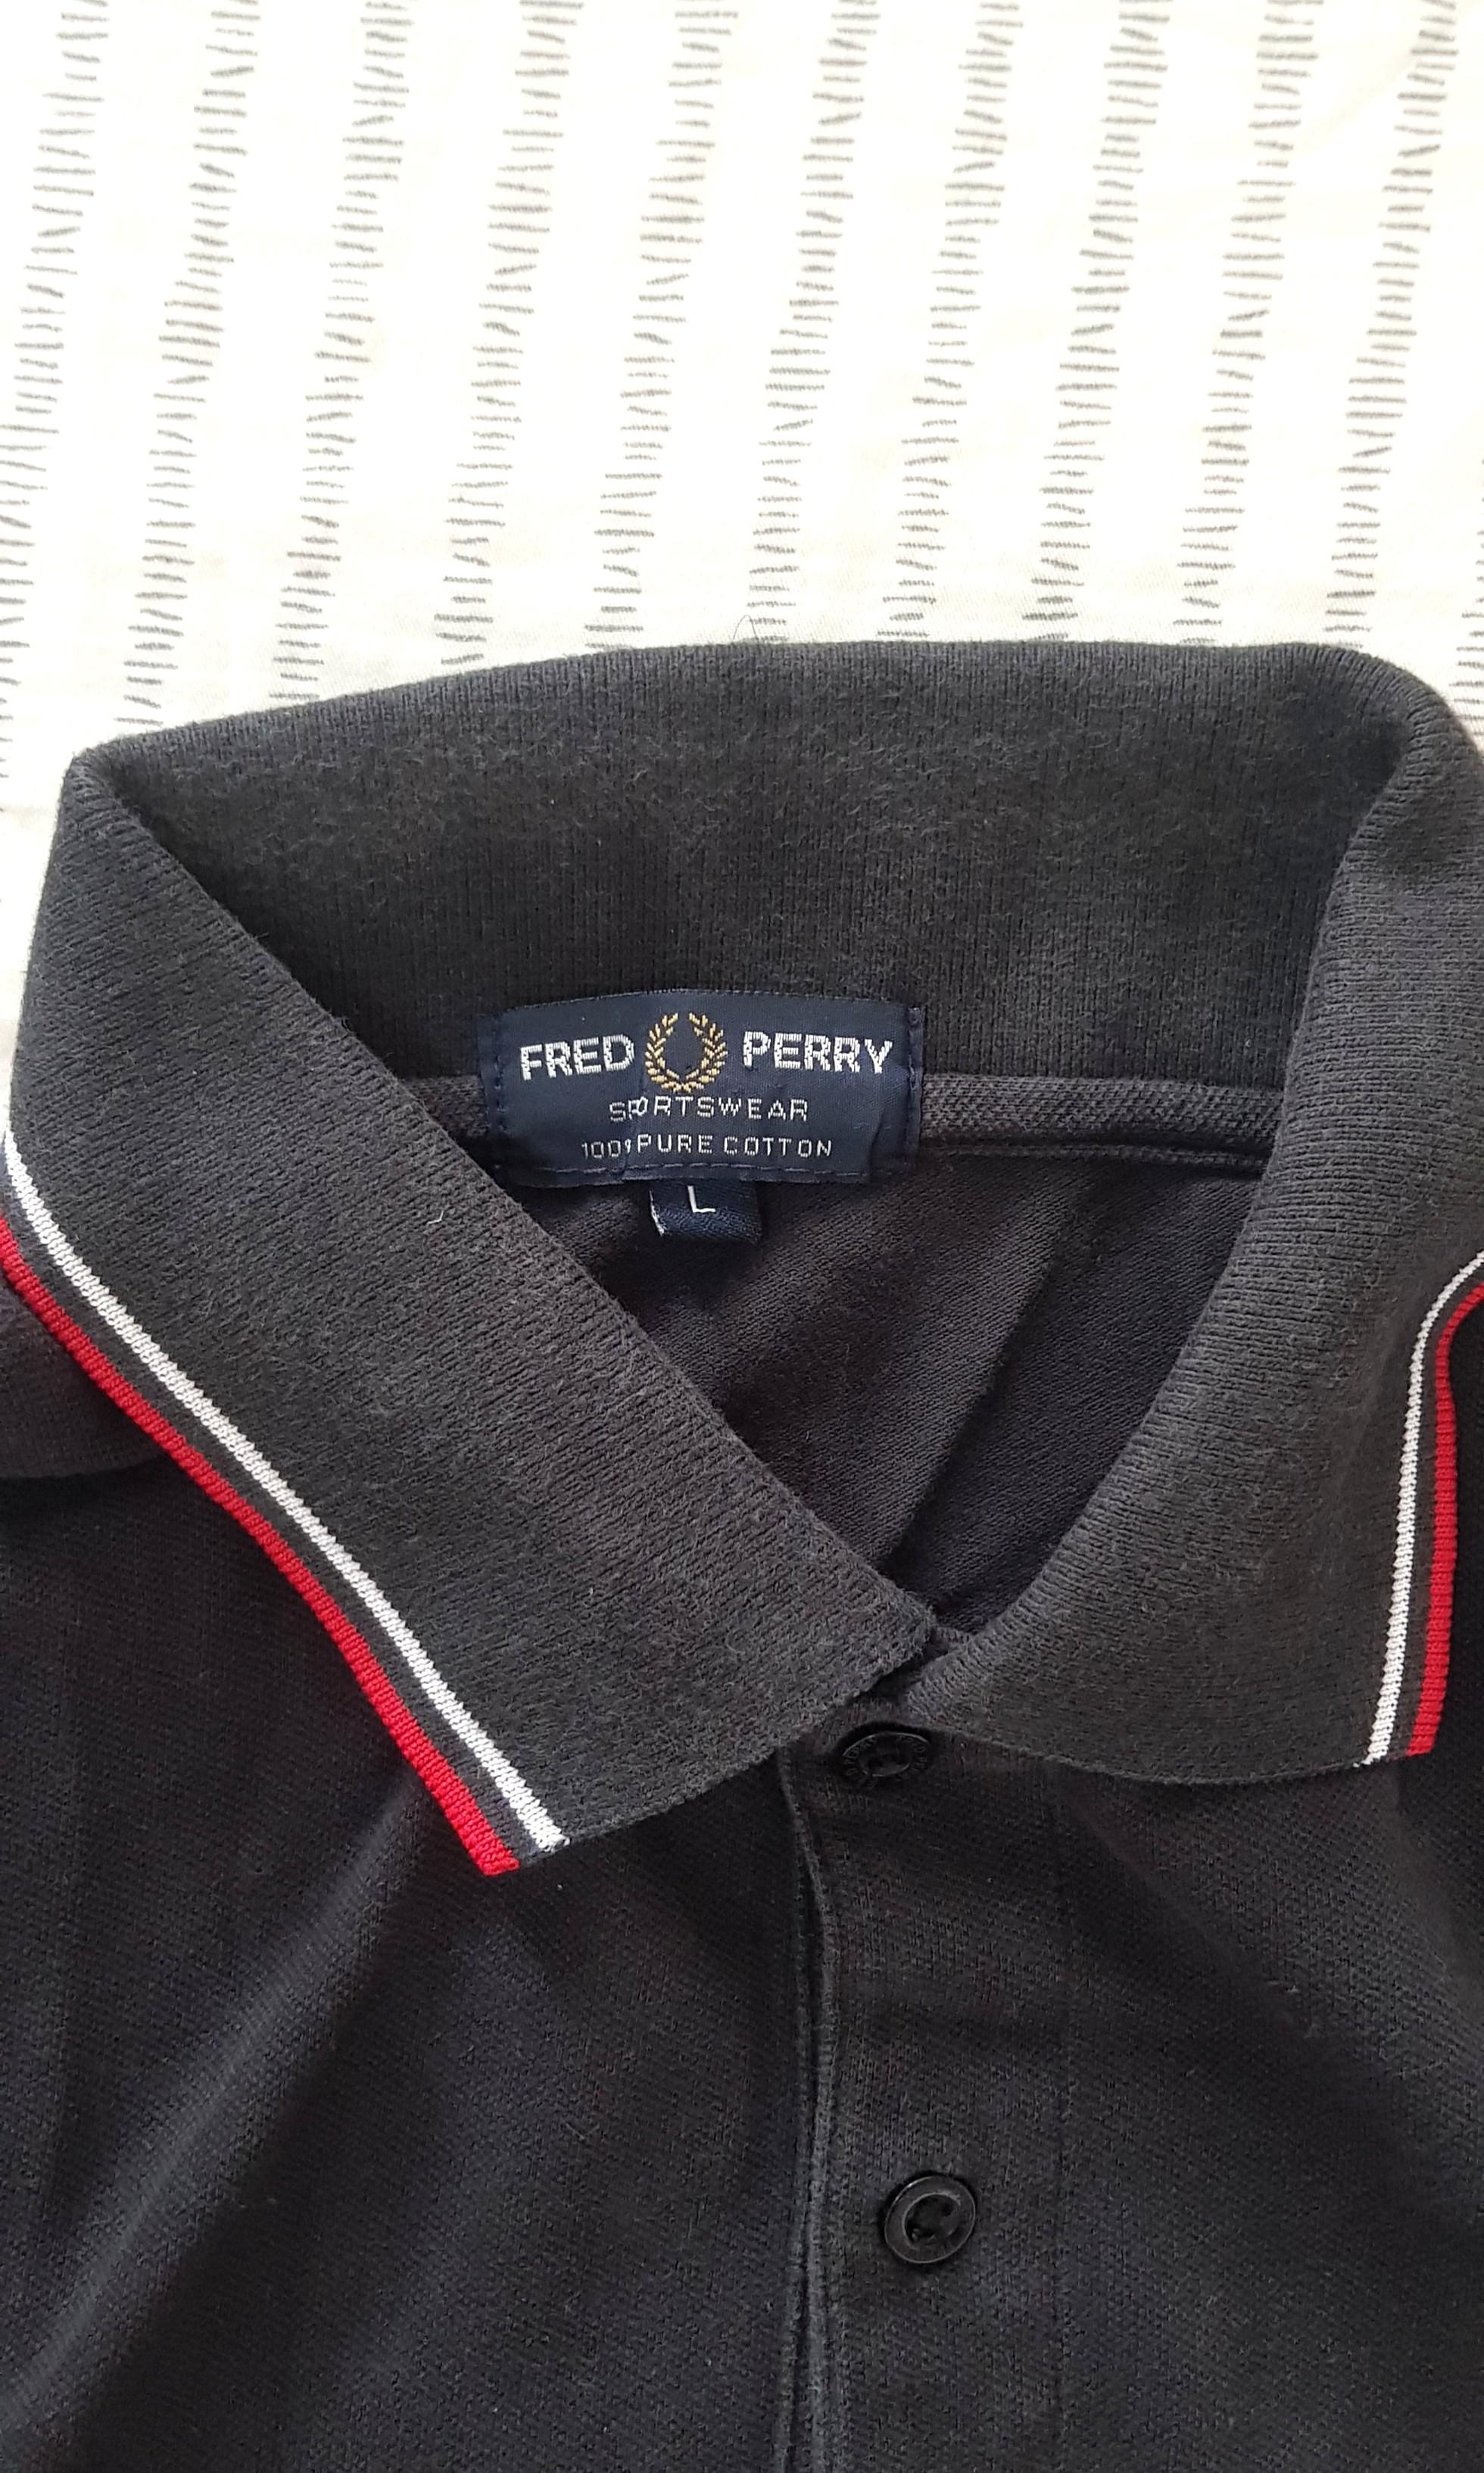 sperry polo shirt